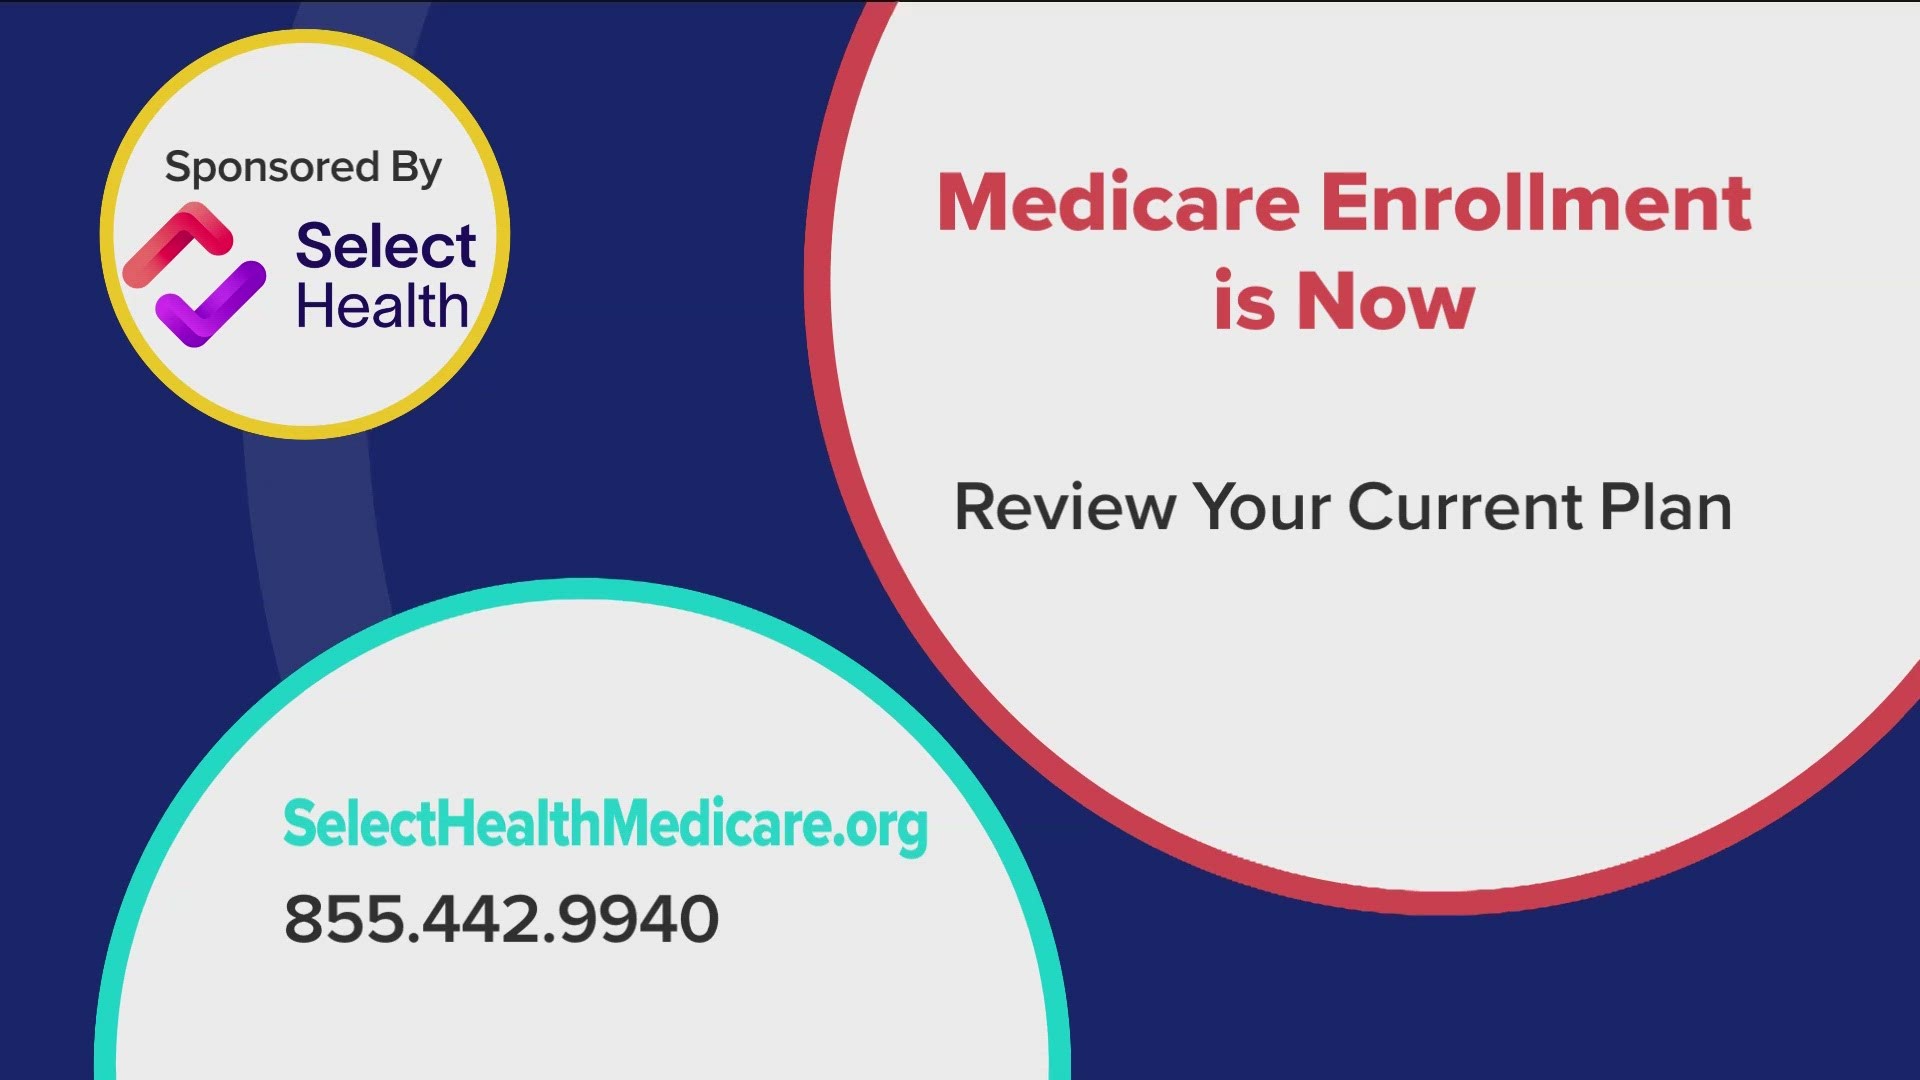 Medicare Enrollment has begun! Call 855.442.9940 or visit SelectHealthMedicare.org. **PAID CONTENT**